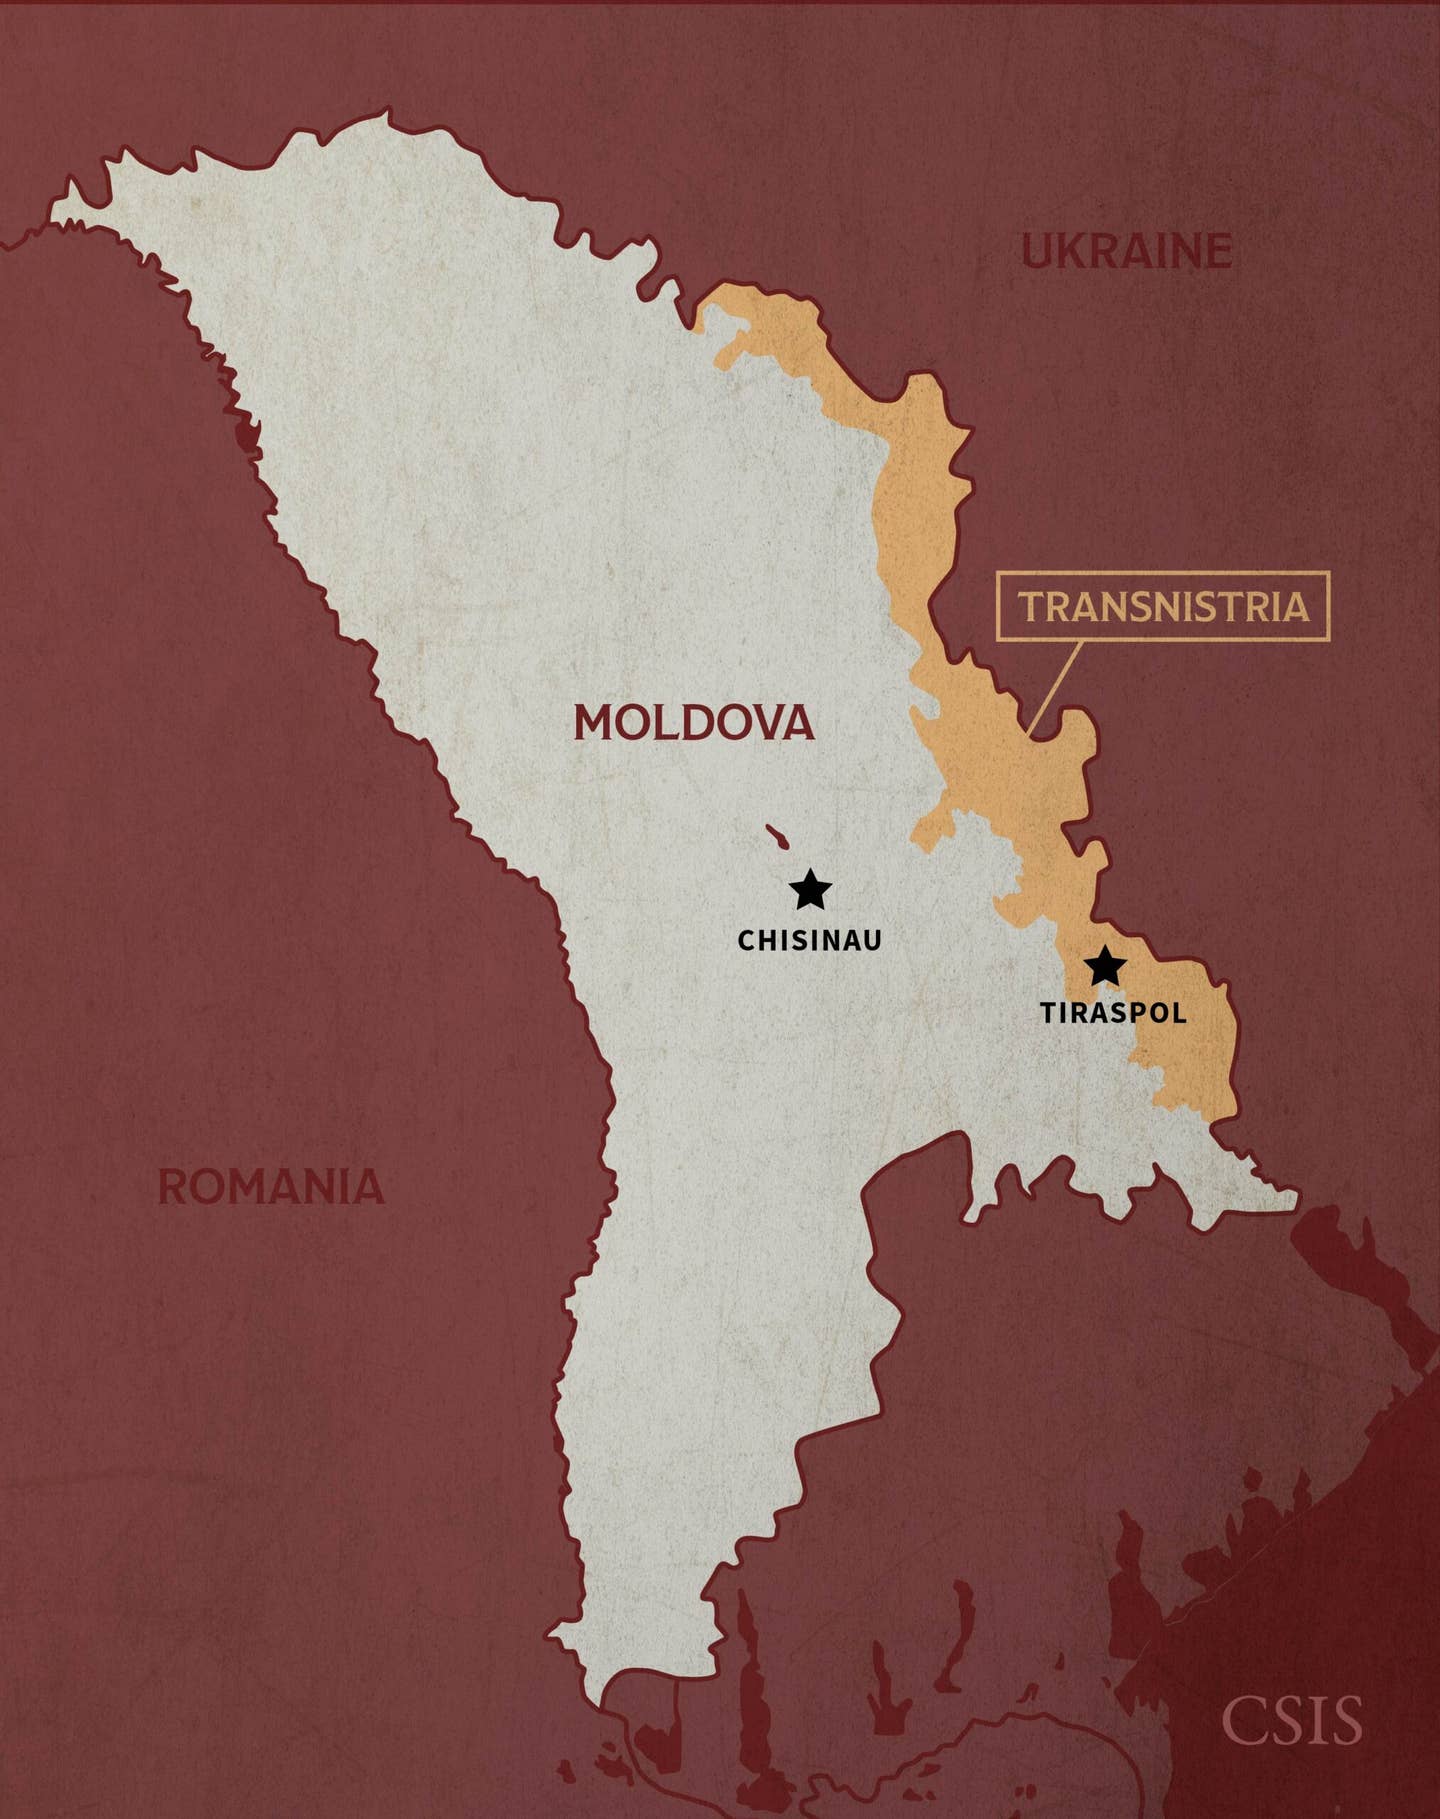 Transnistria in relation to greater Moldova. <em>CSIS.org</em>